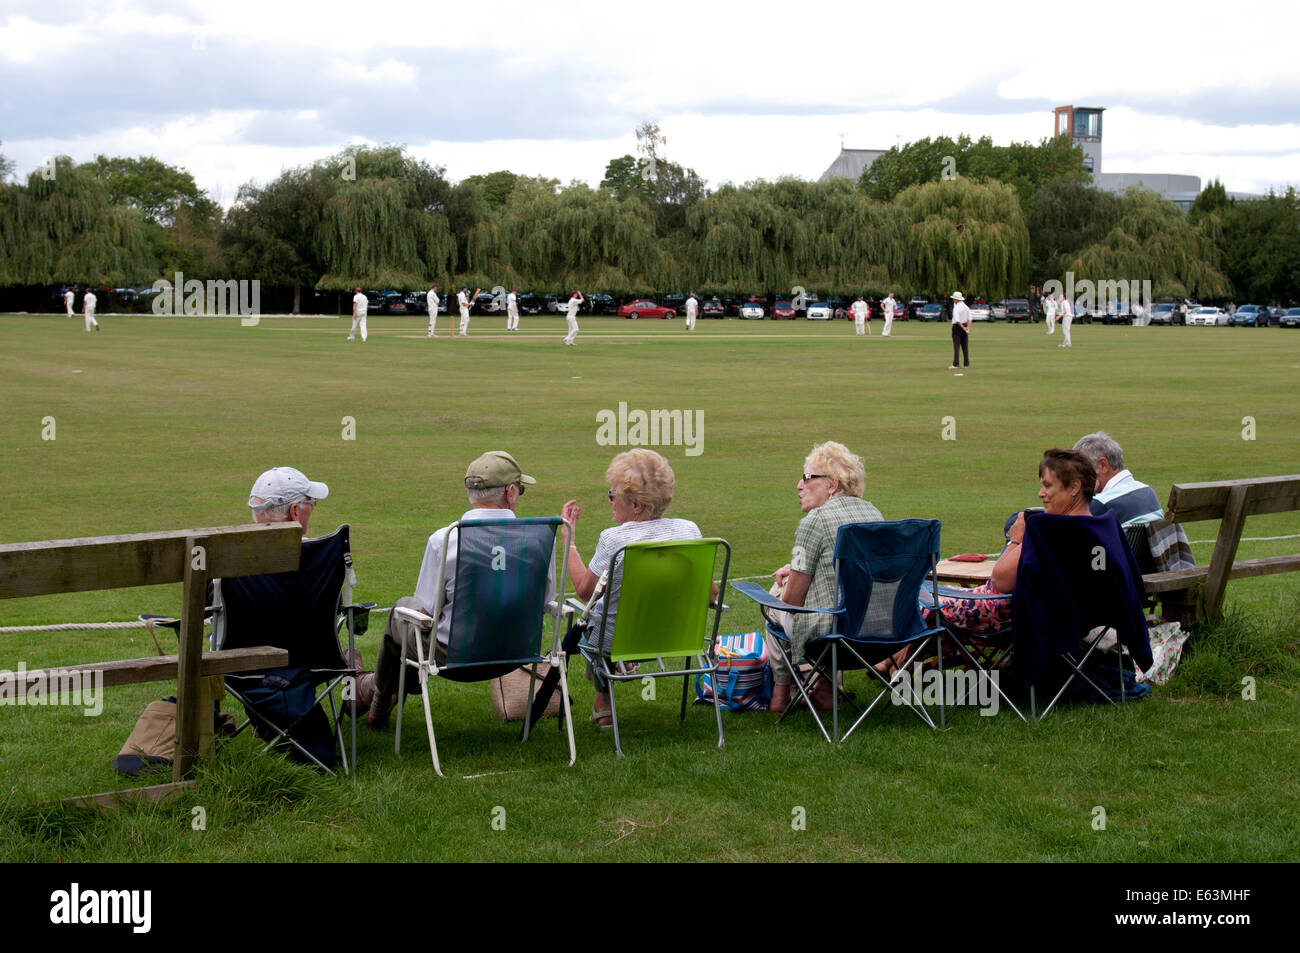 Elderly cricket spectators, Stratford-upon-Avon, UK Stock Photo